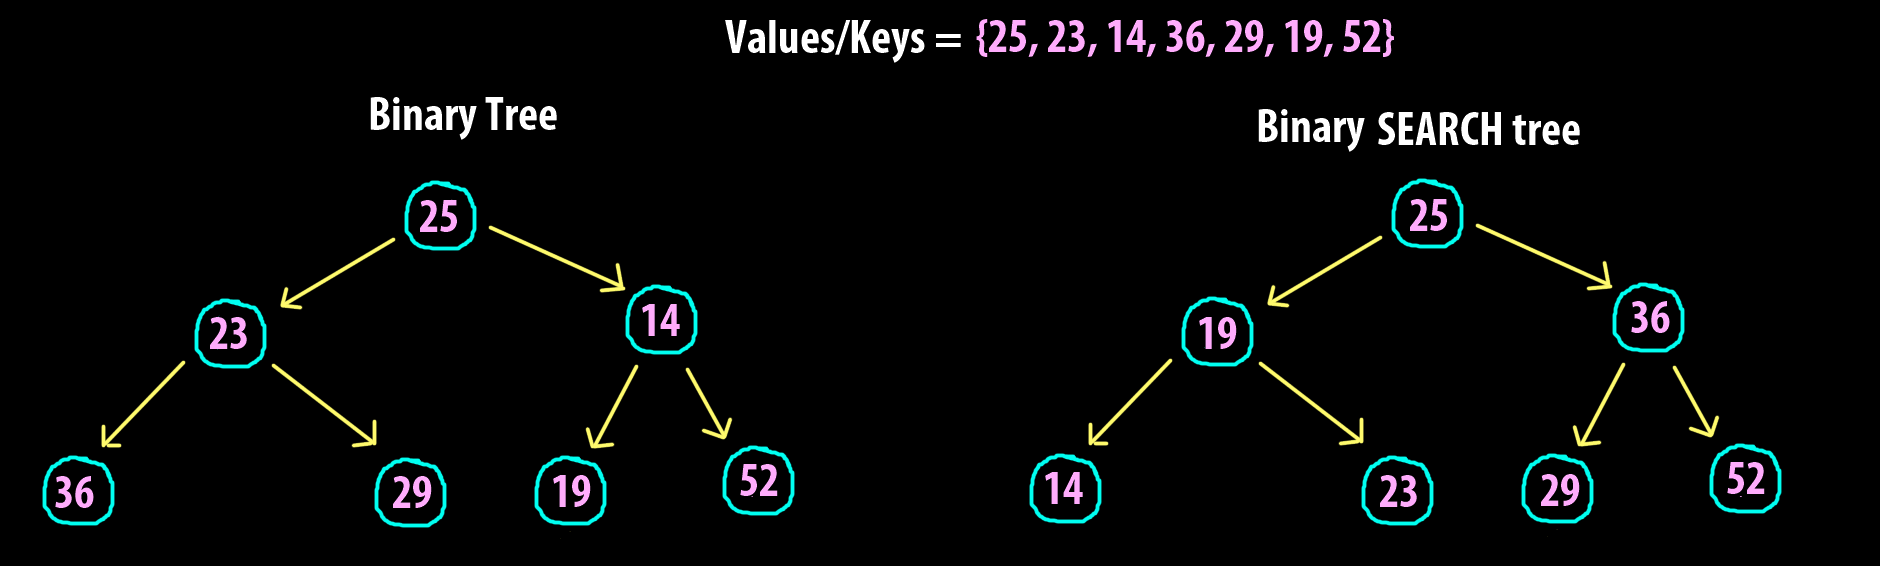 binary tree vs binary search tree diagram